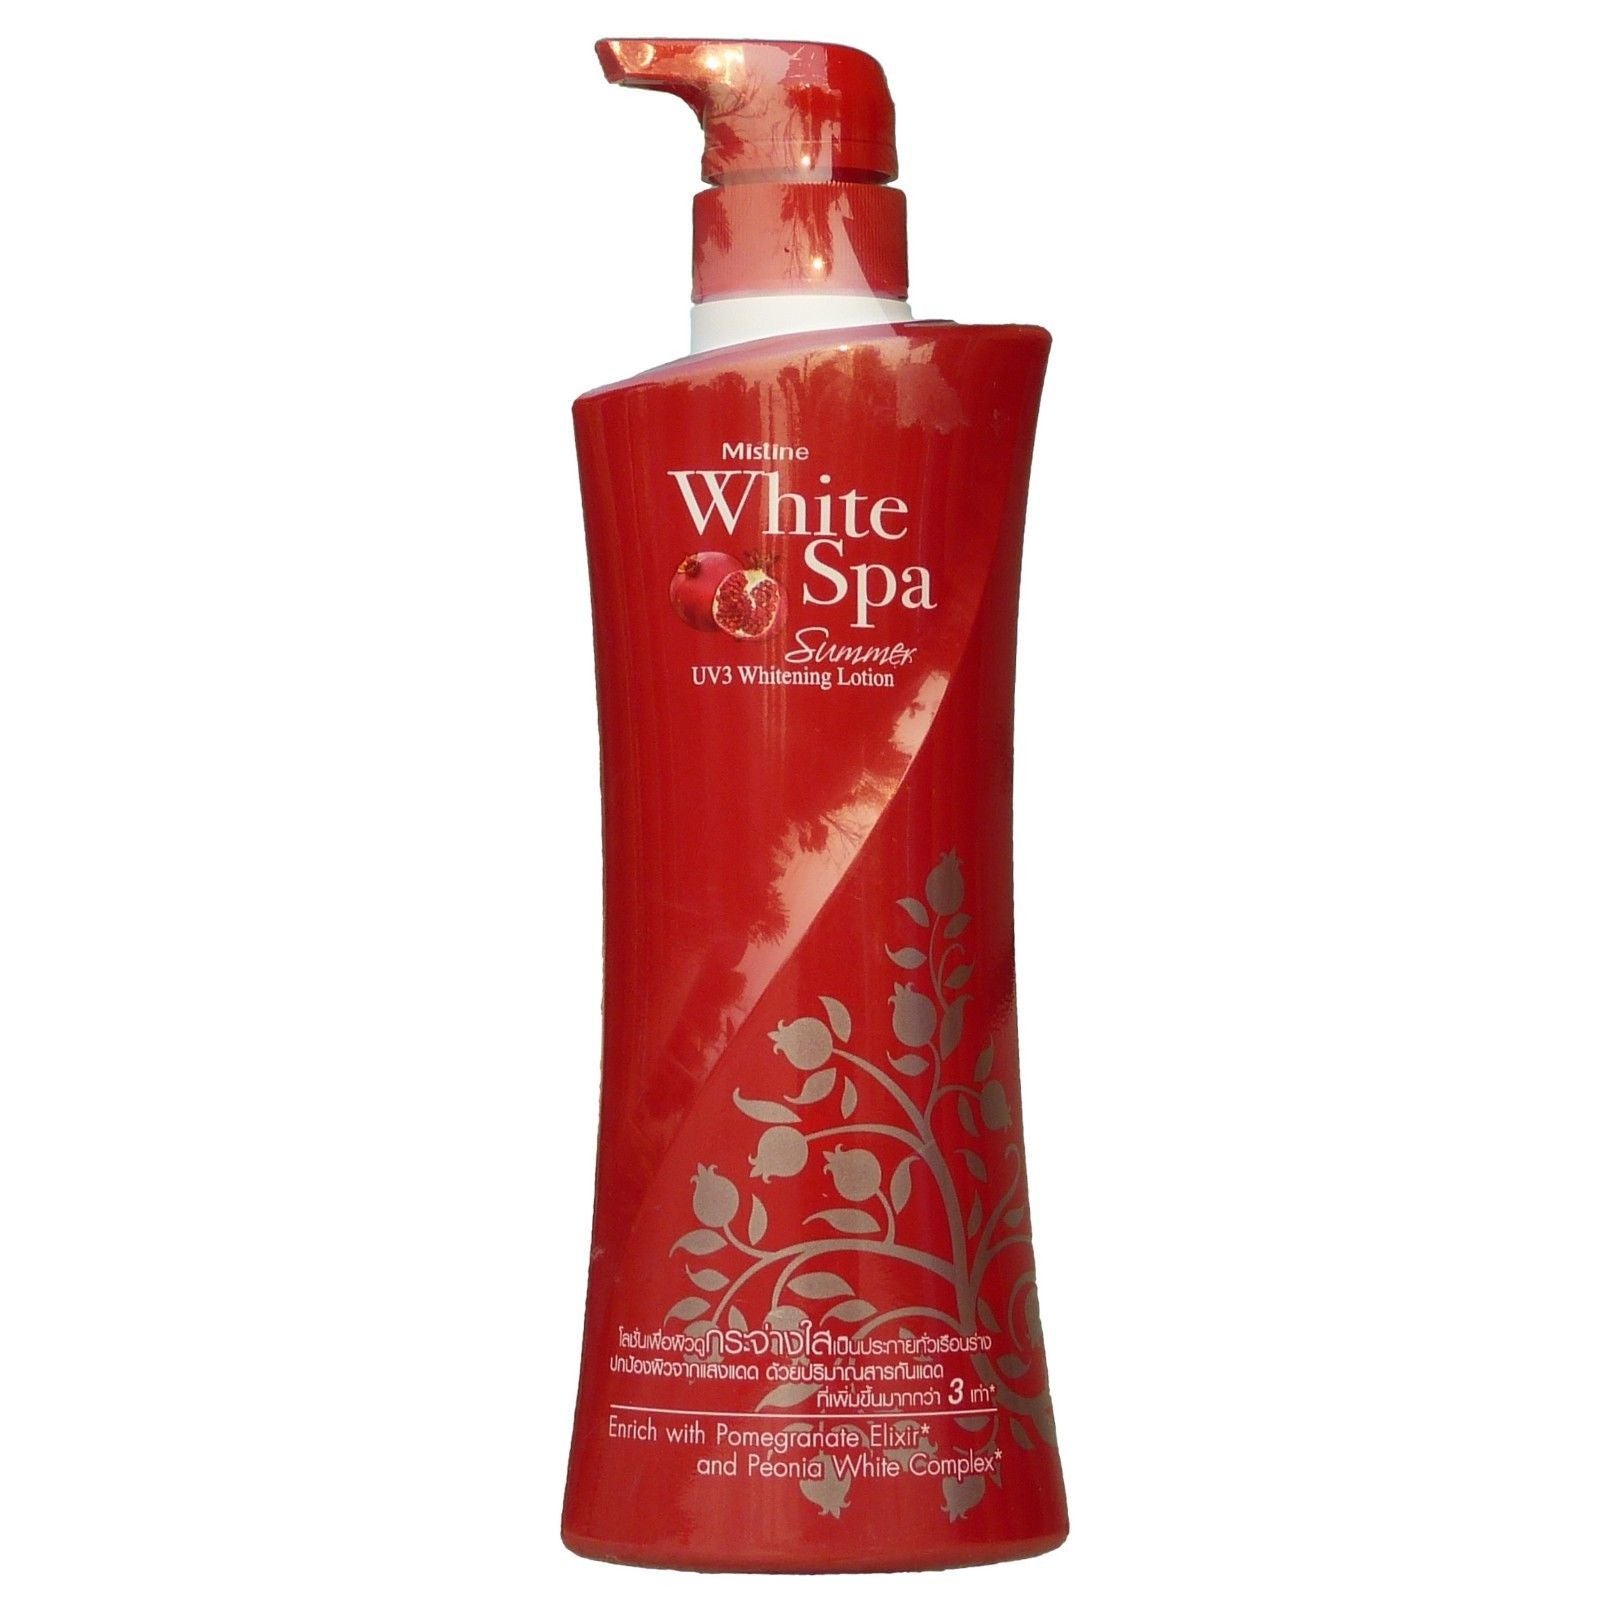 Mistine White Spa Summer UV Whitening Body Lotion Pomegranate 400ml - Asian Beauty Supply